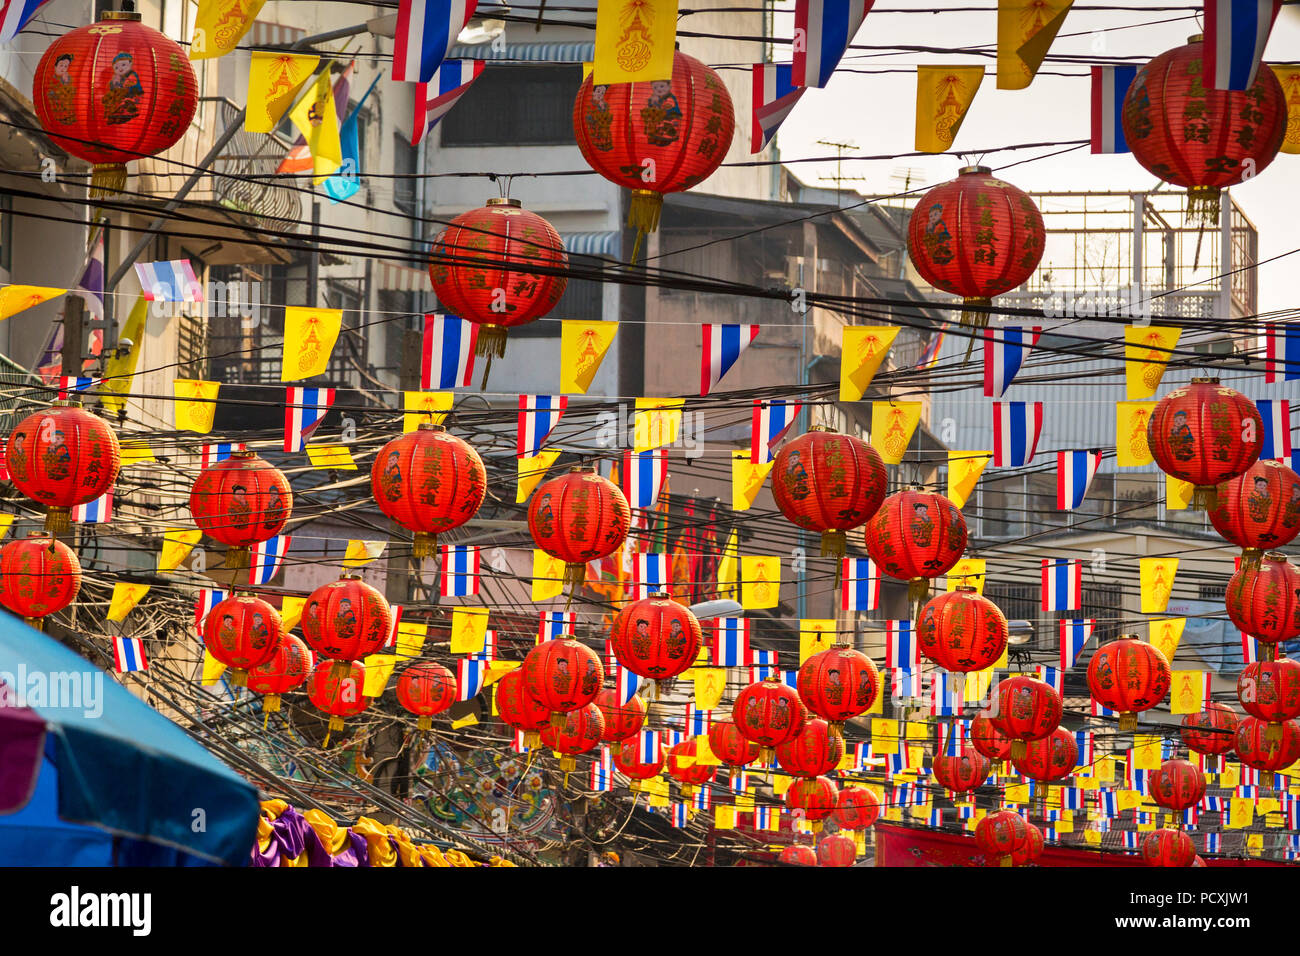 Chinese New Year lanterns in Chinatown, Yaowarat, Bangkok, Thailand Stock Photo